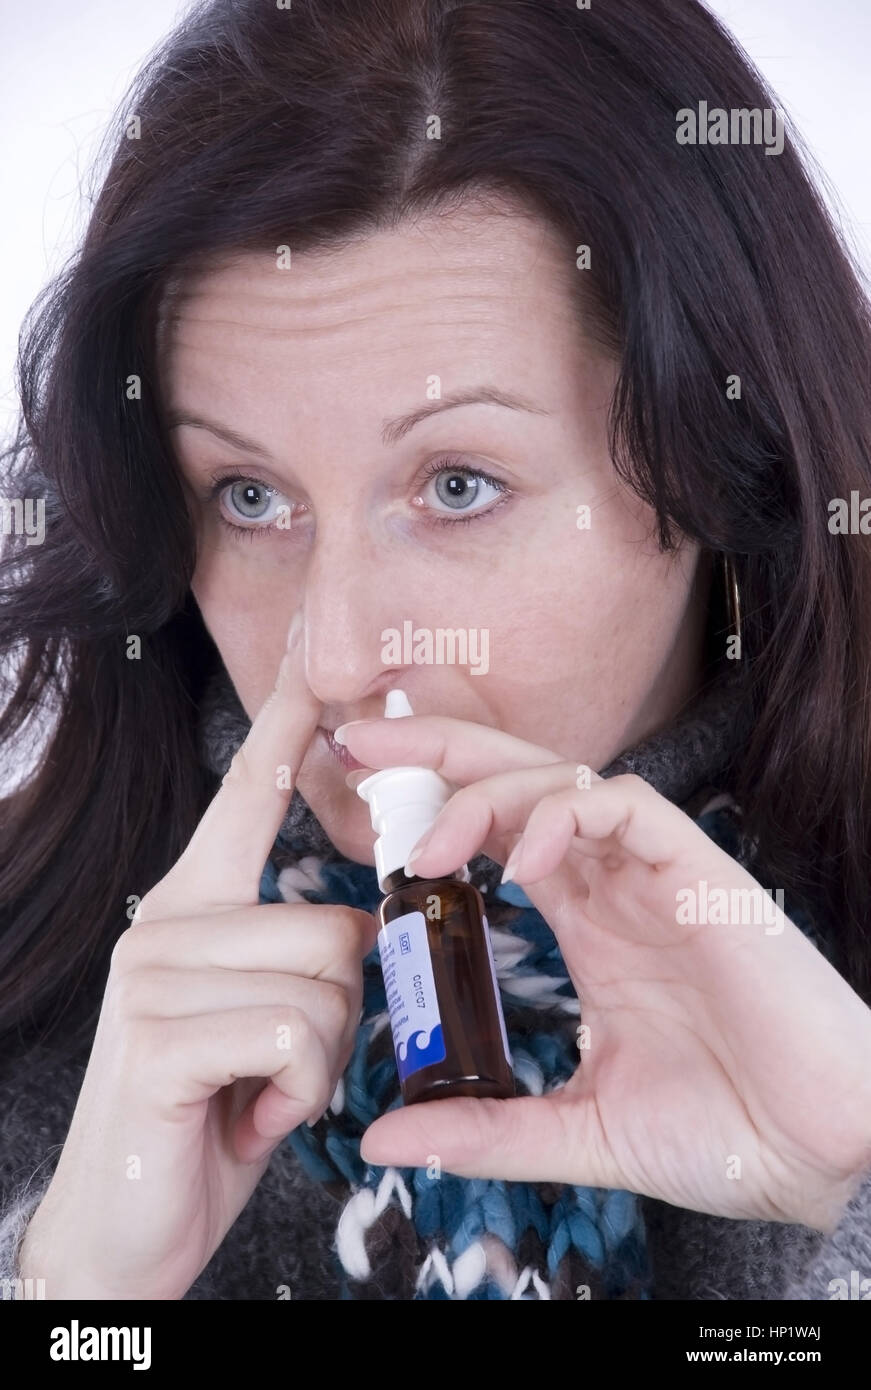 Model release , Junge Frau verwendet Nasenspray - woman using nasal spray Stock Photo